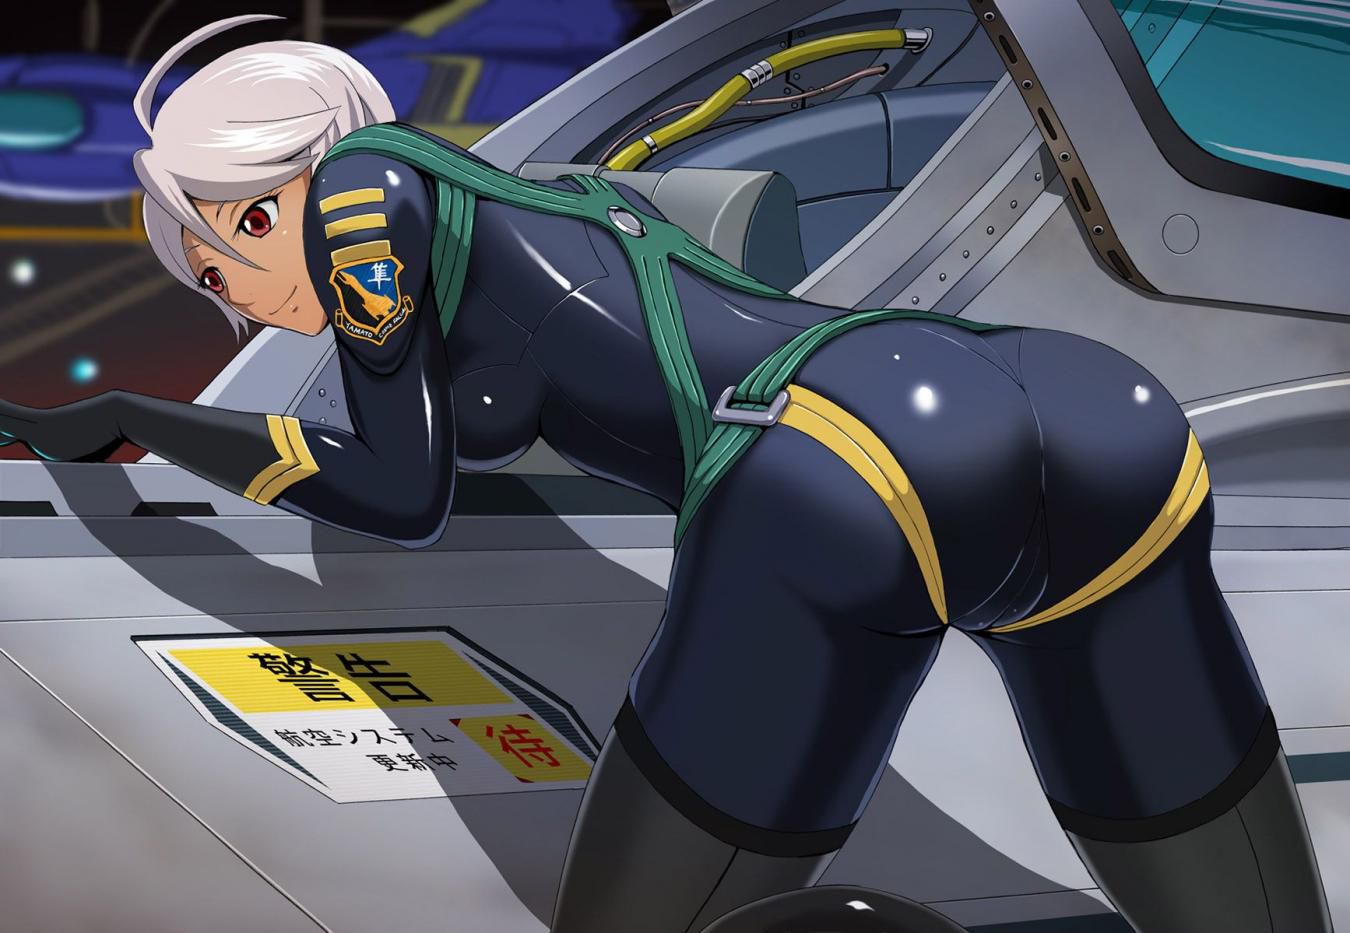 Space Battleship Yamato 2199 is erotic, isn't it? 13